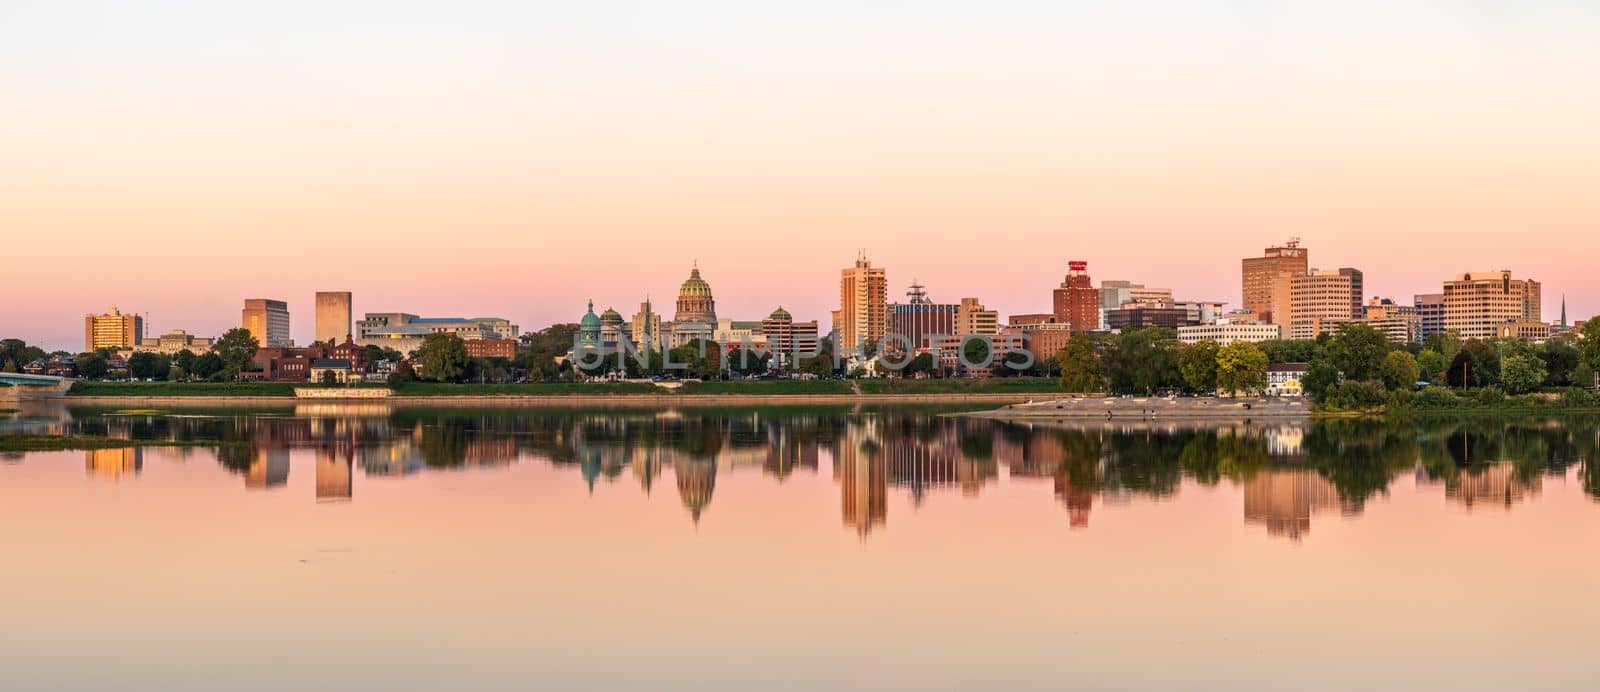 Sunset illuminates the city skyline of Harrisburg in Pennsylvania by steheap